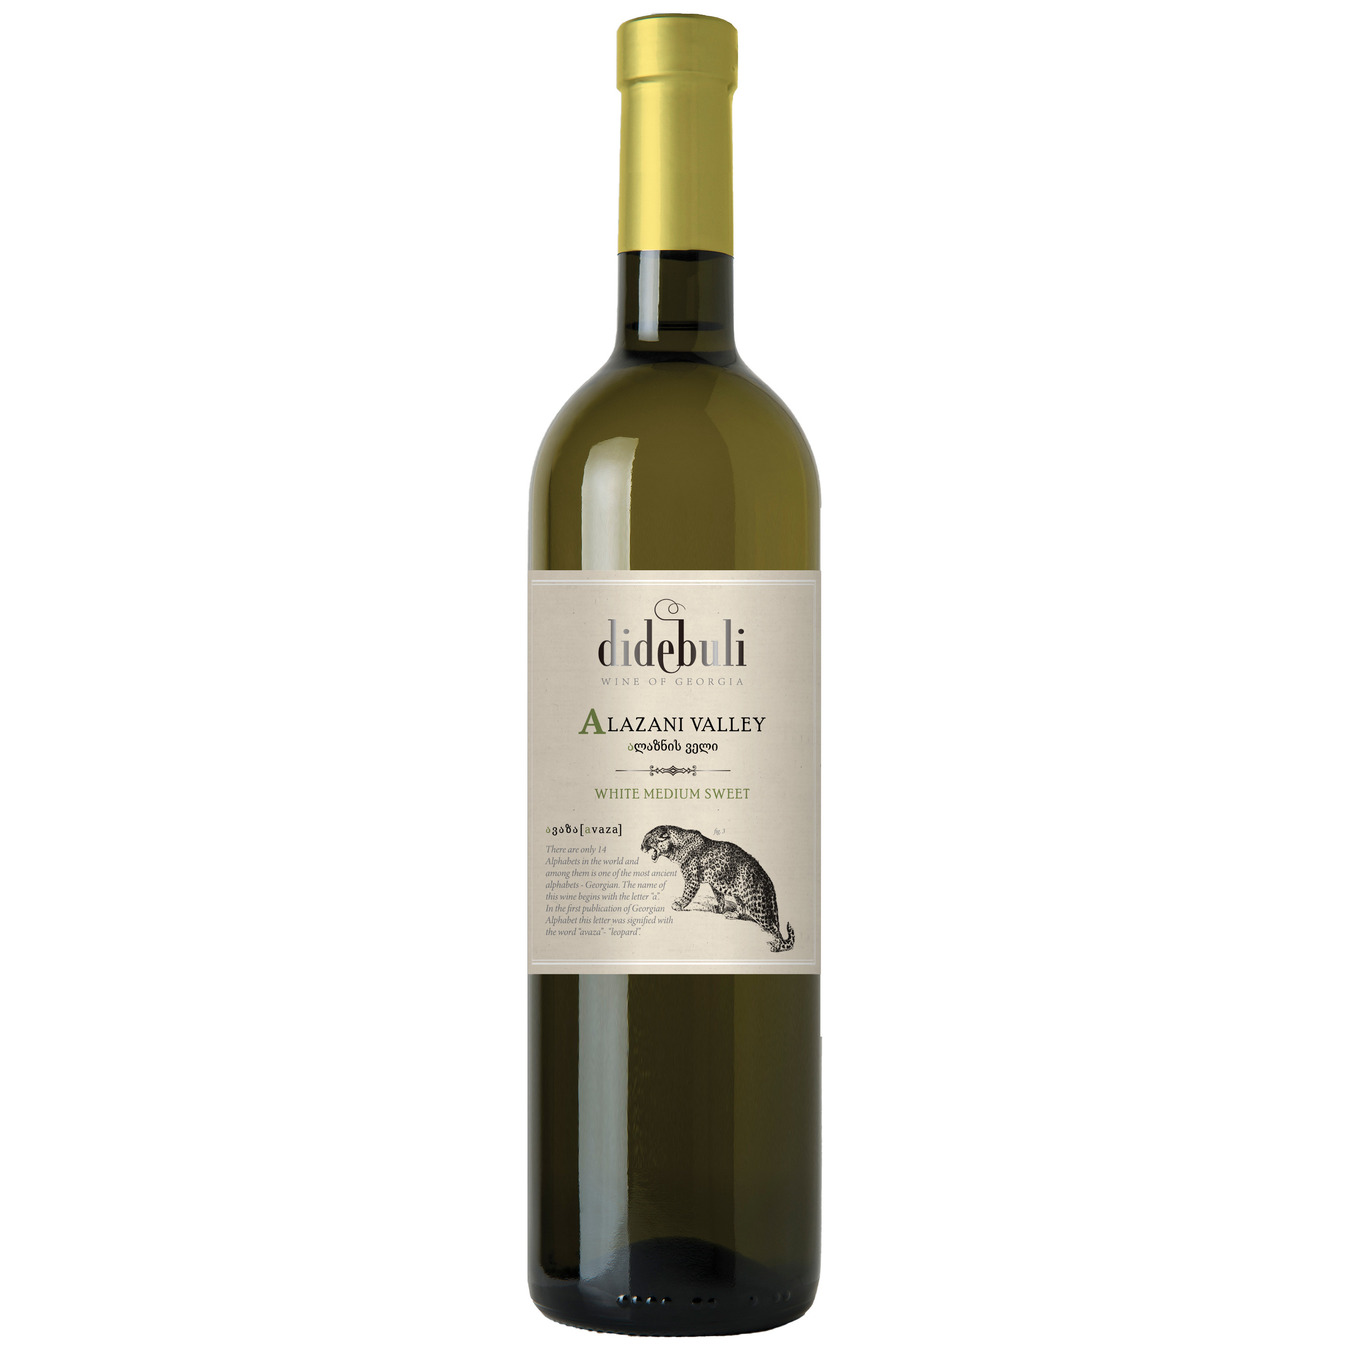 Didebuli Alazani Valley white semi-sweet wine 11% 0.75 l